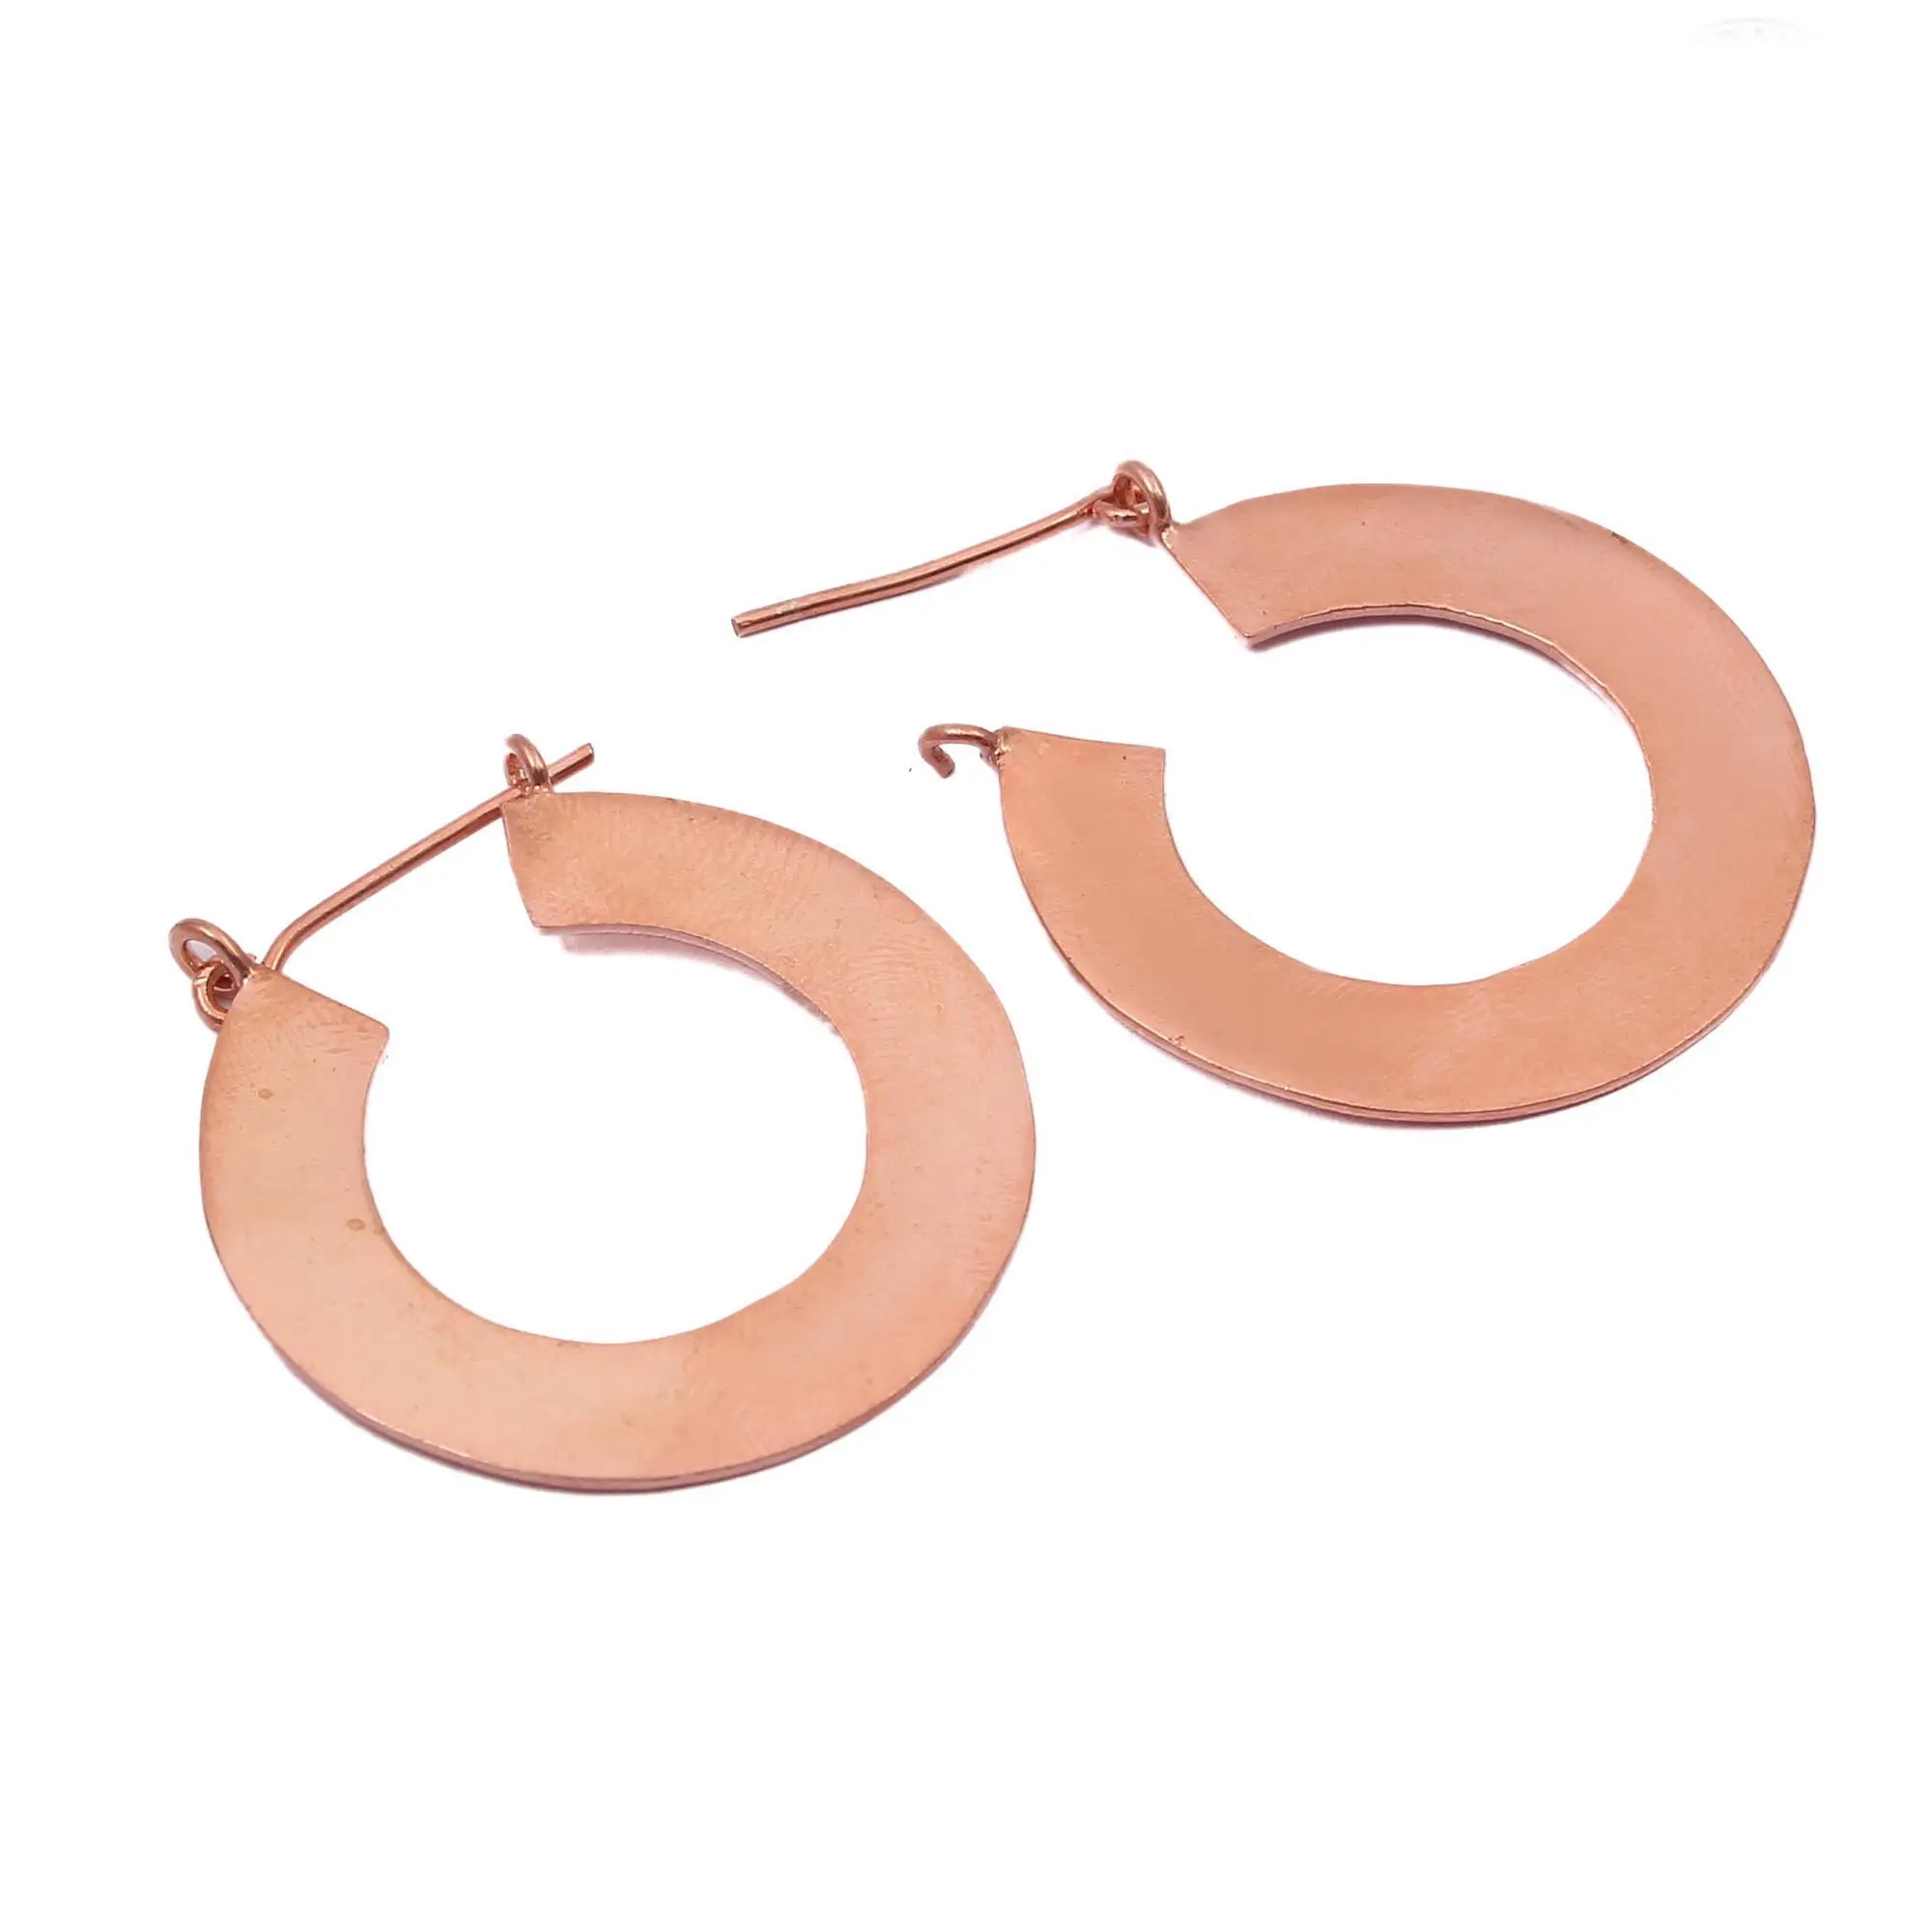 Hoop Earrings Exclusive Customized Handmade Plain Simple Jewelry for Women Thin Hoop Minimialist Earrings Rose Gold Plated Brass